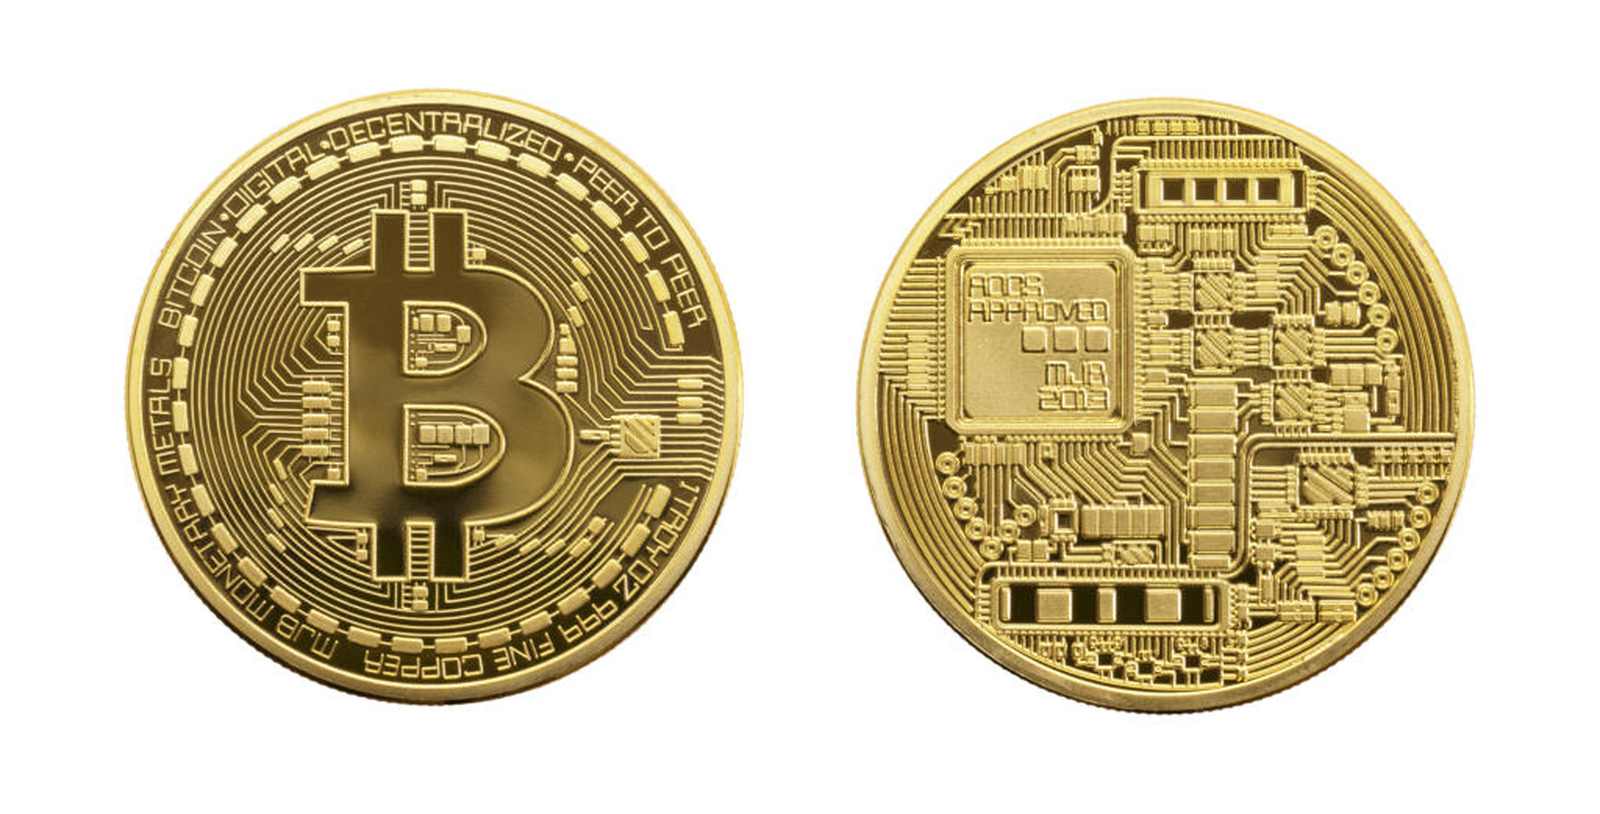 Bitcoin means what курс обмена валют в банках спб